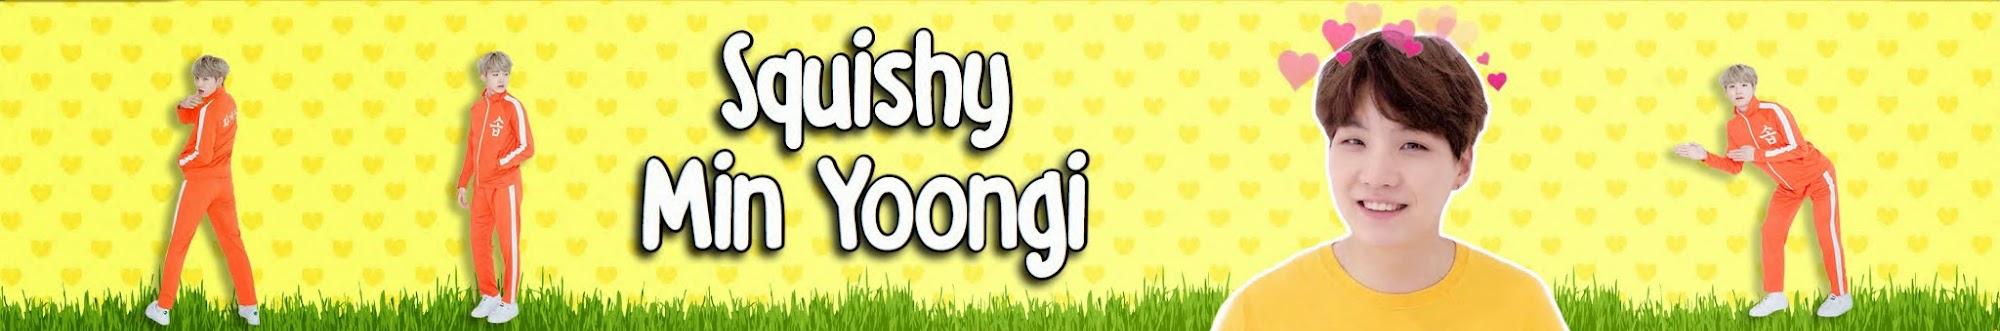 Squishy Min Yoongi